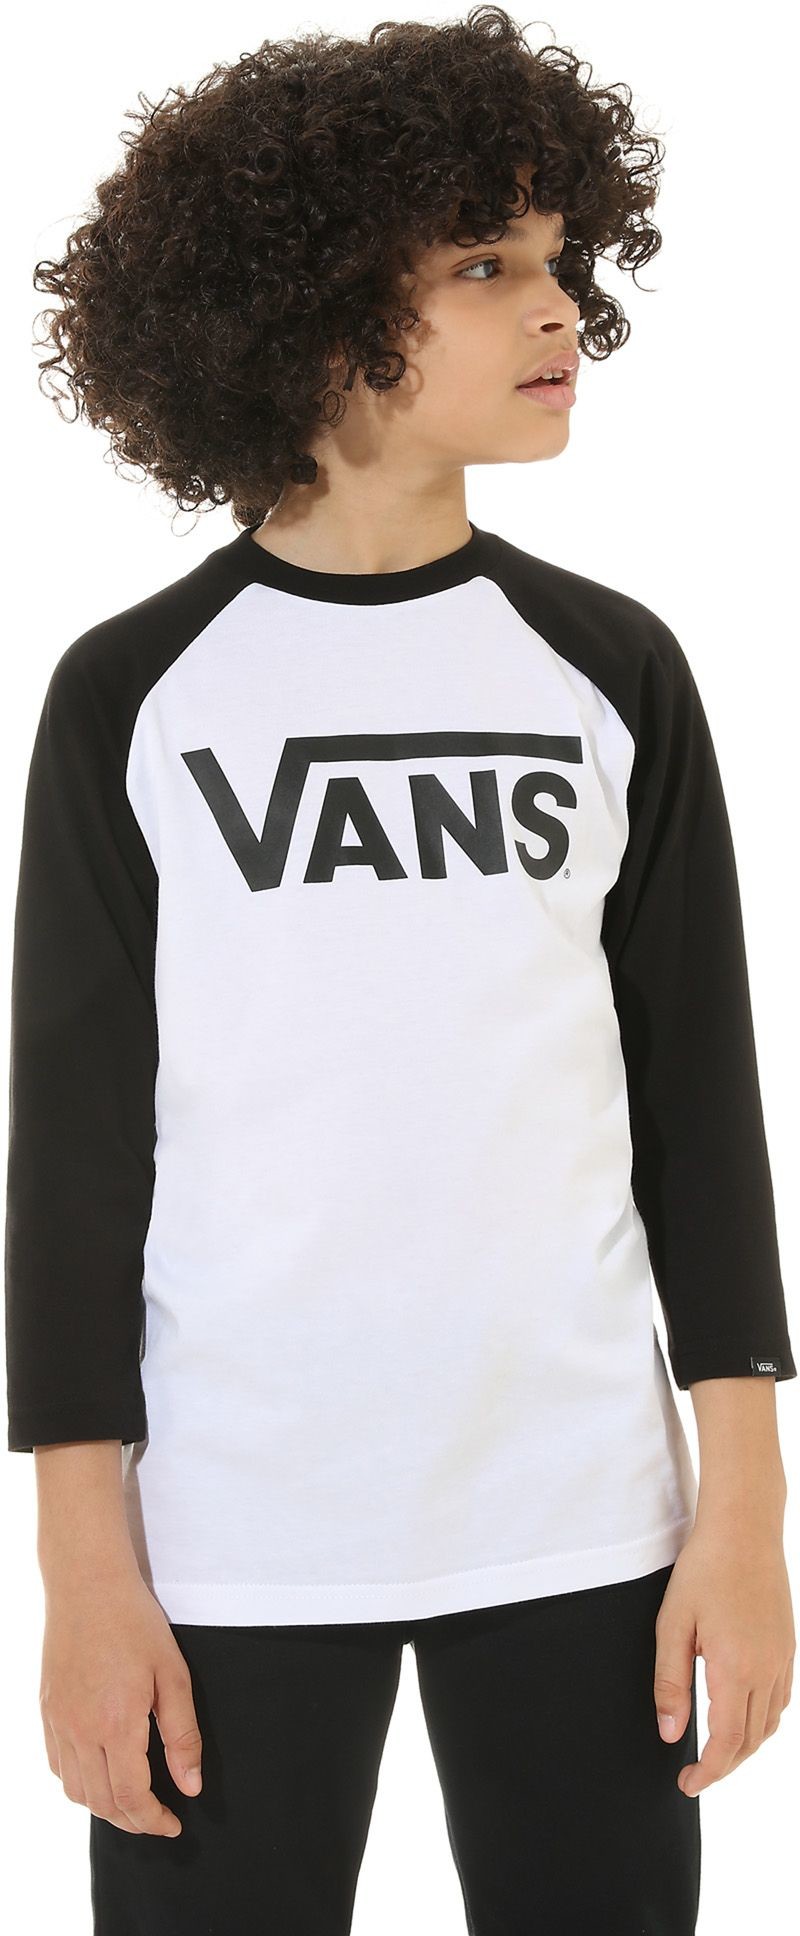 Vans t-shirt BOYS CLASSIC RAGLAN White/Black